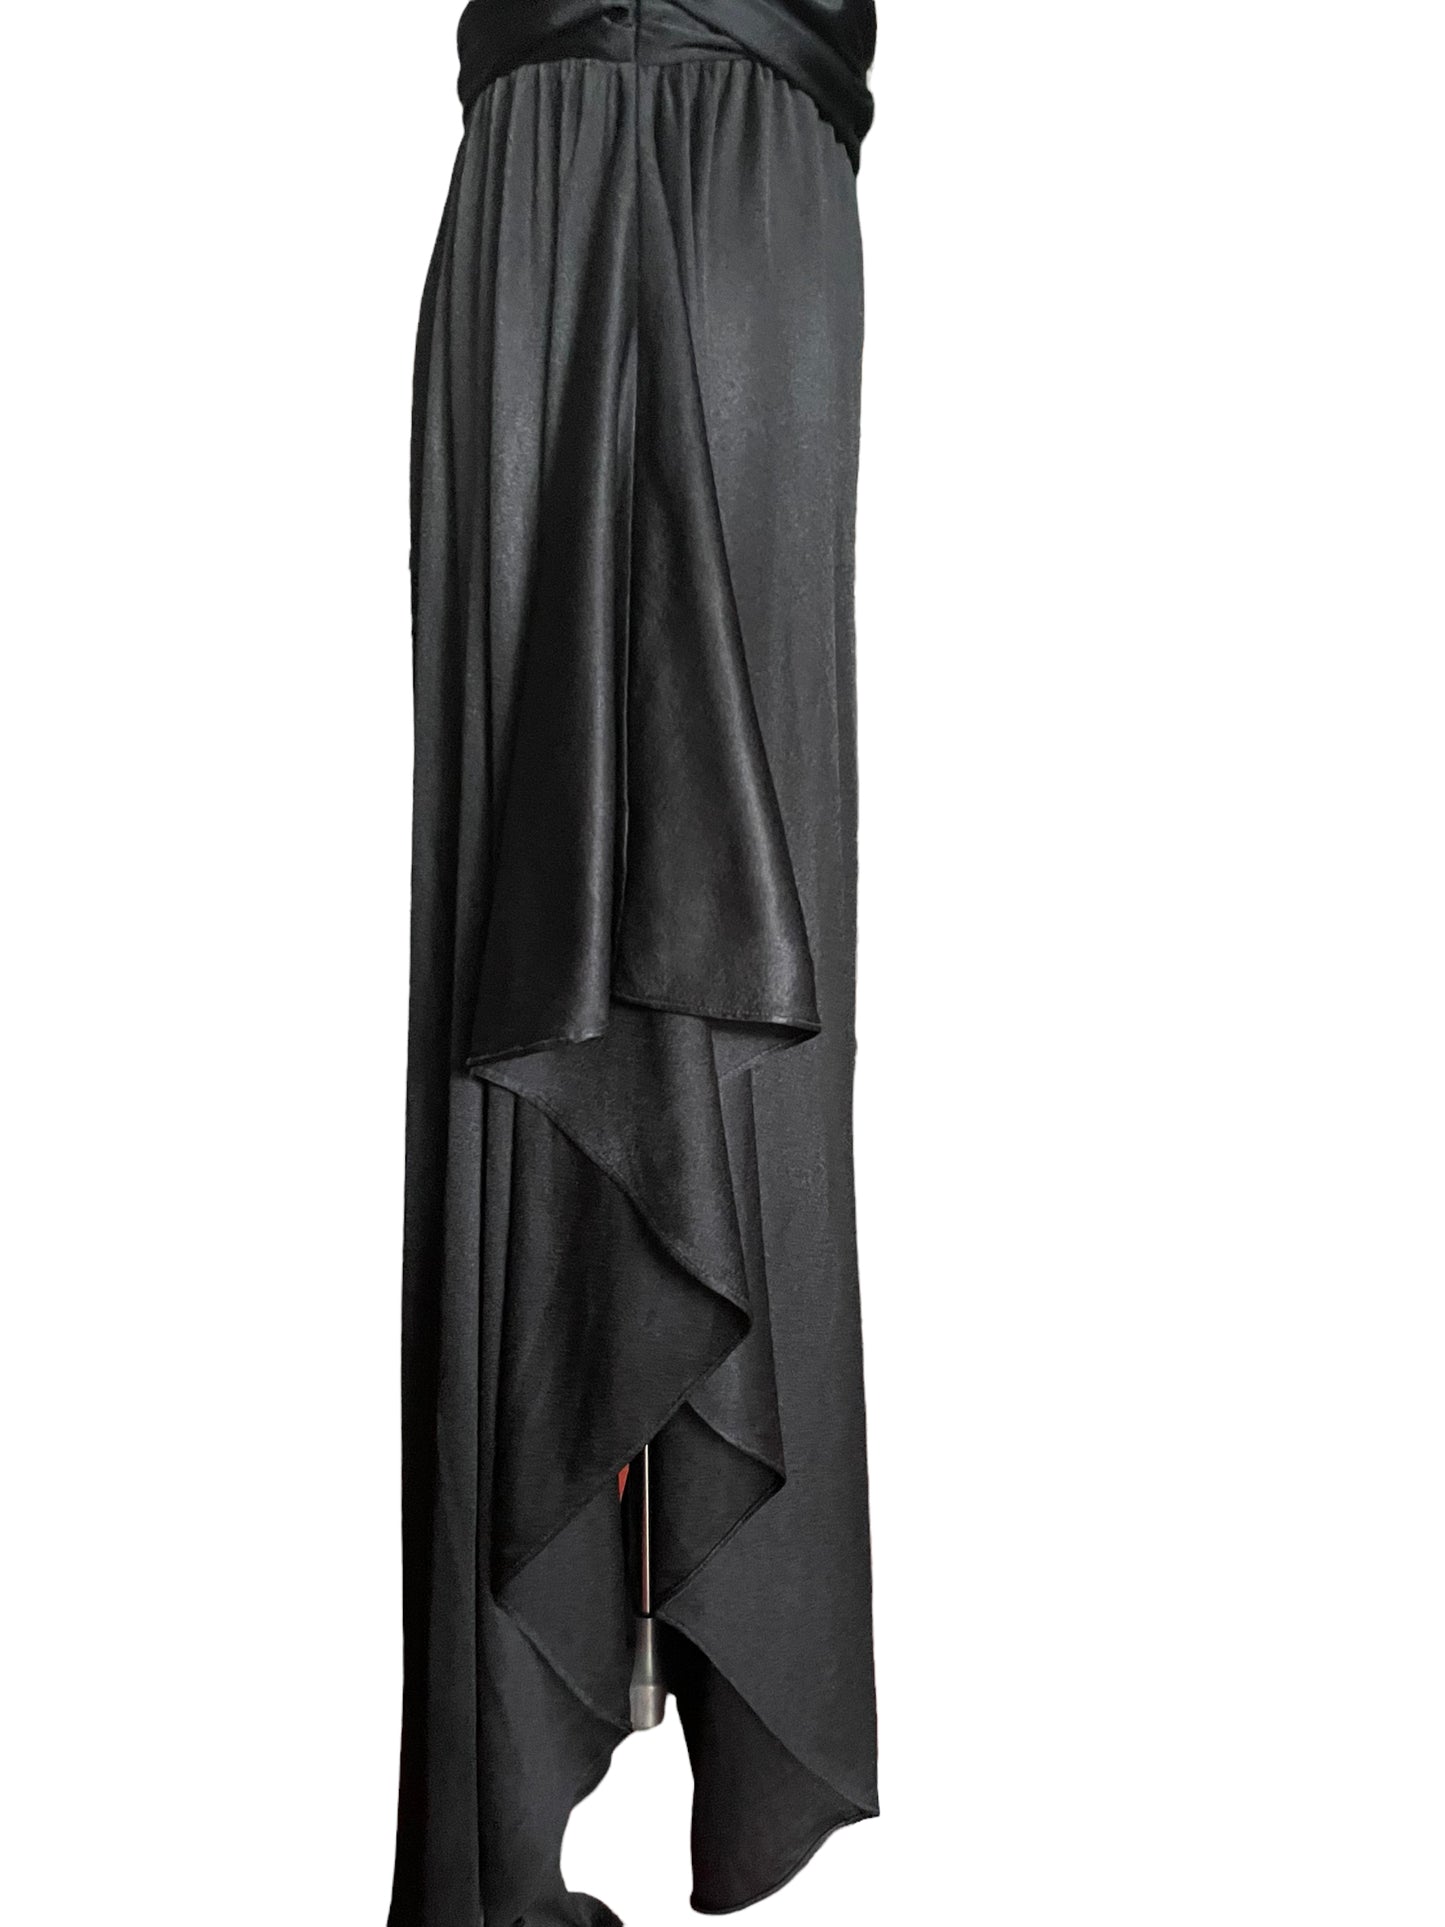 Vintage 1970s New Leaf Black Disco Dress SZ XS-S  Side detail of skirt.